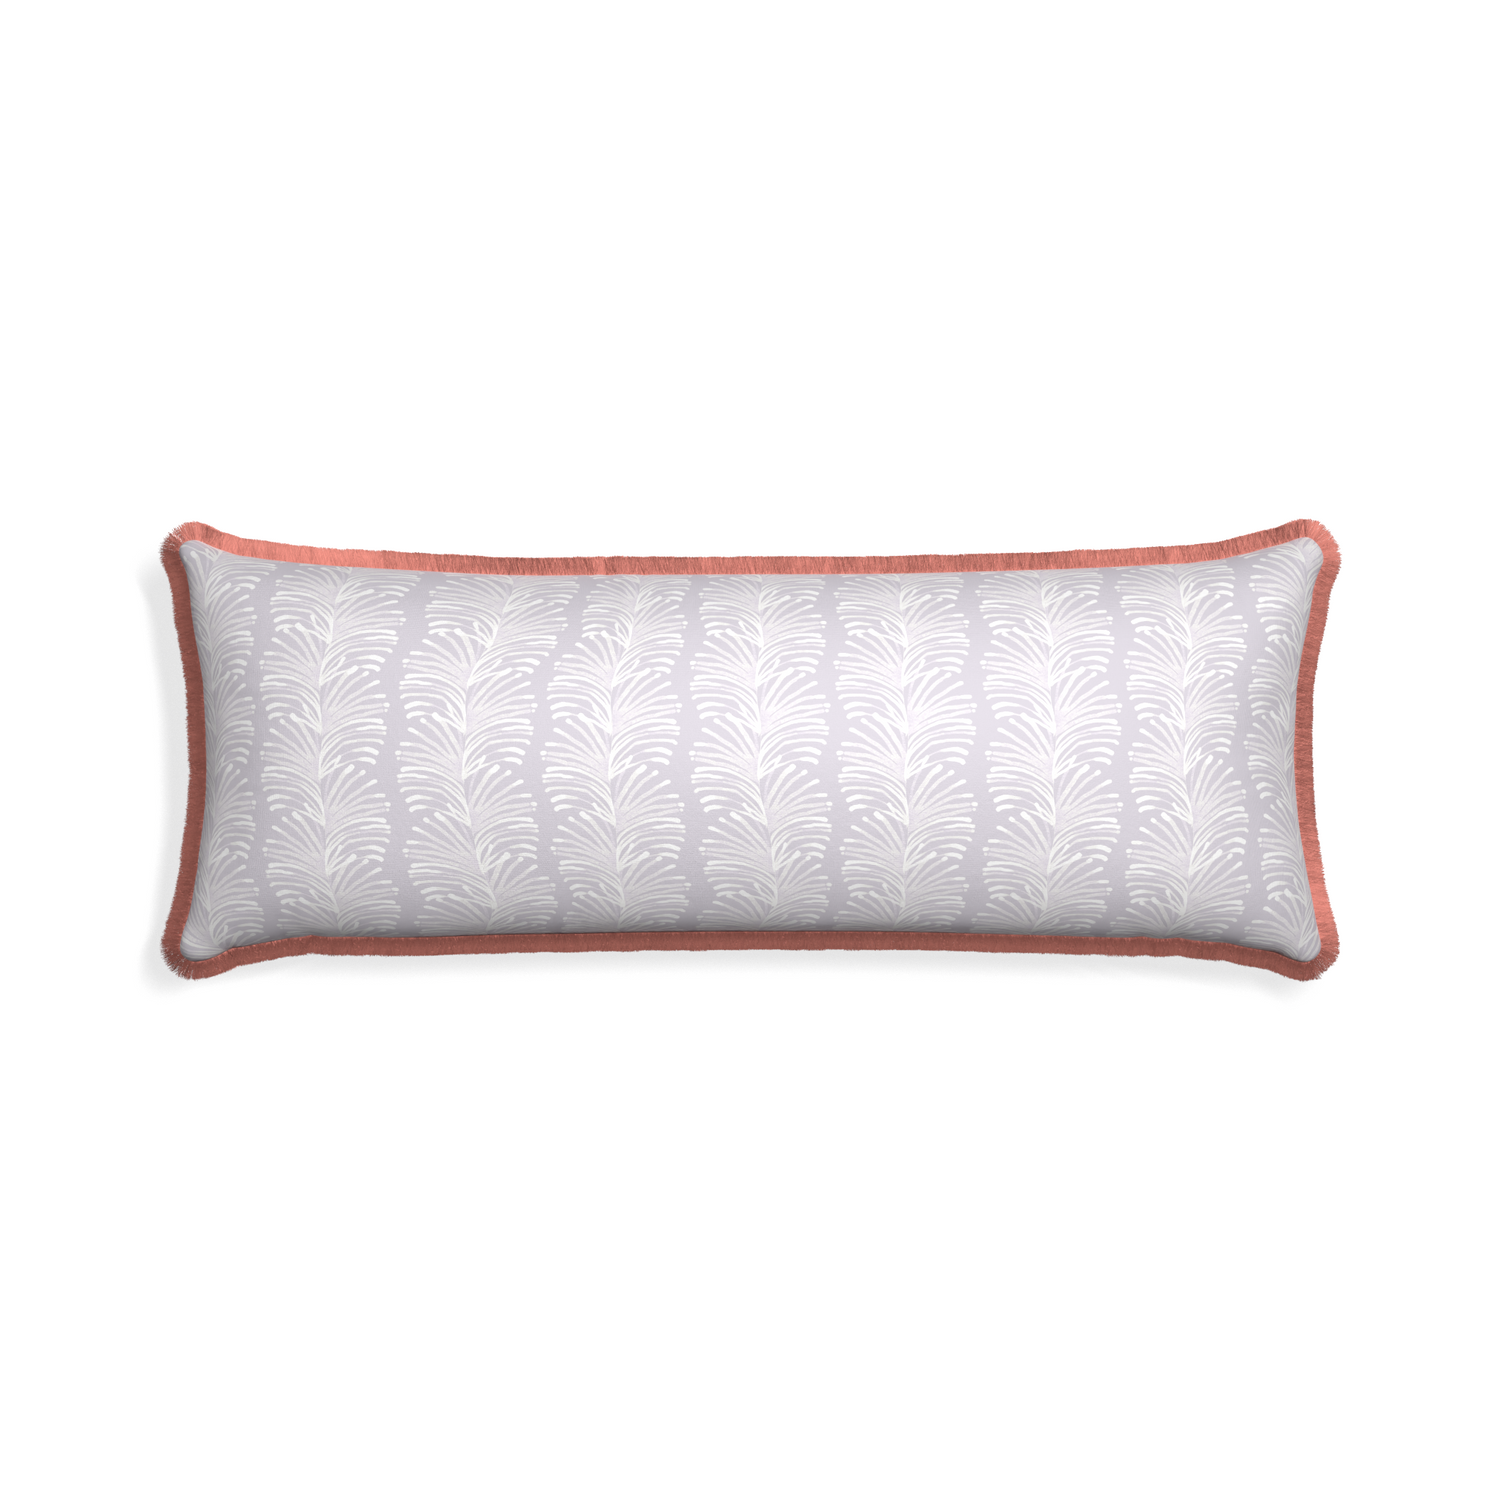 Xl-lumbar emma lavender custom pillow with d fringe on white background